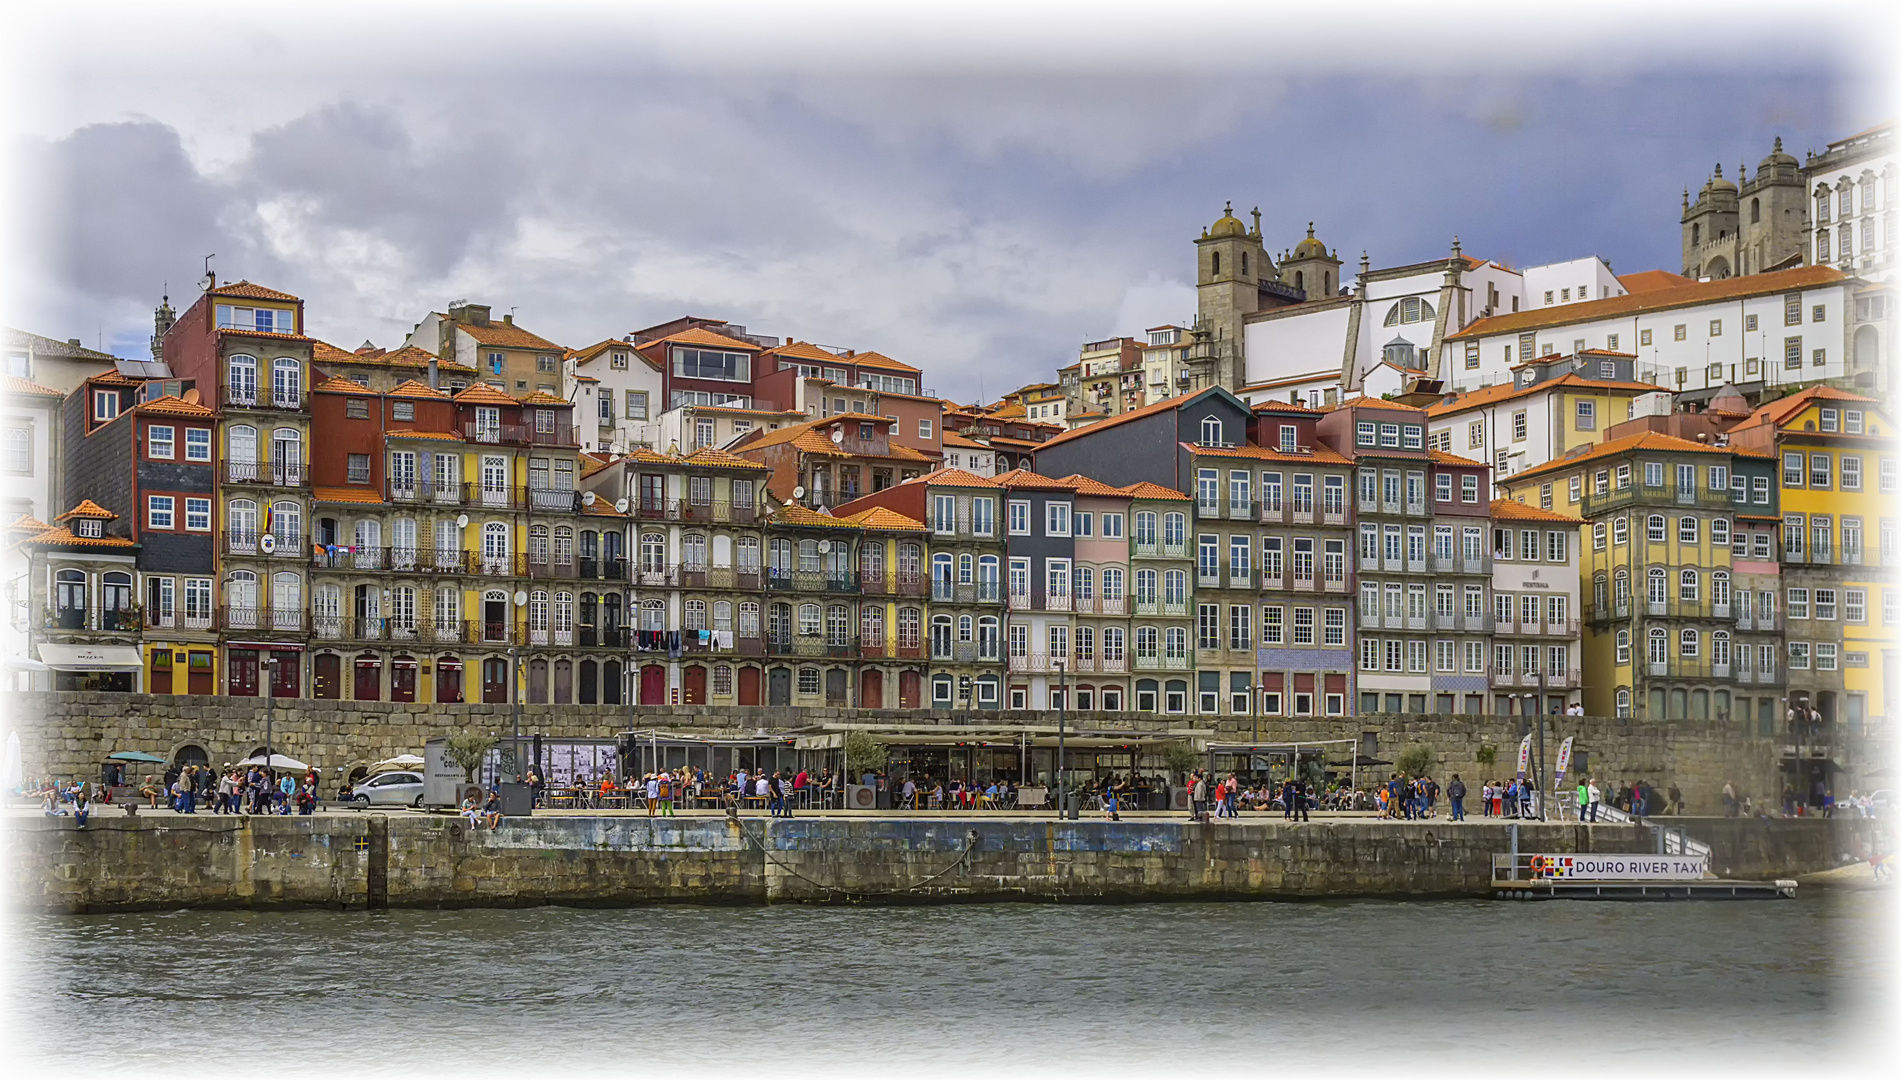 Porto am Duero